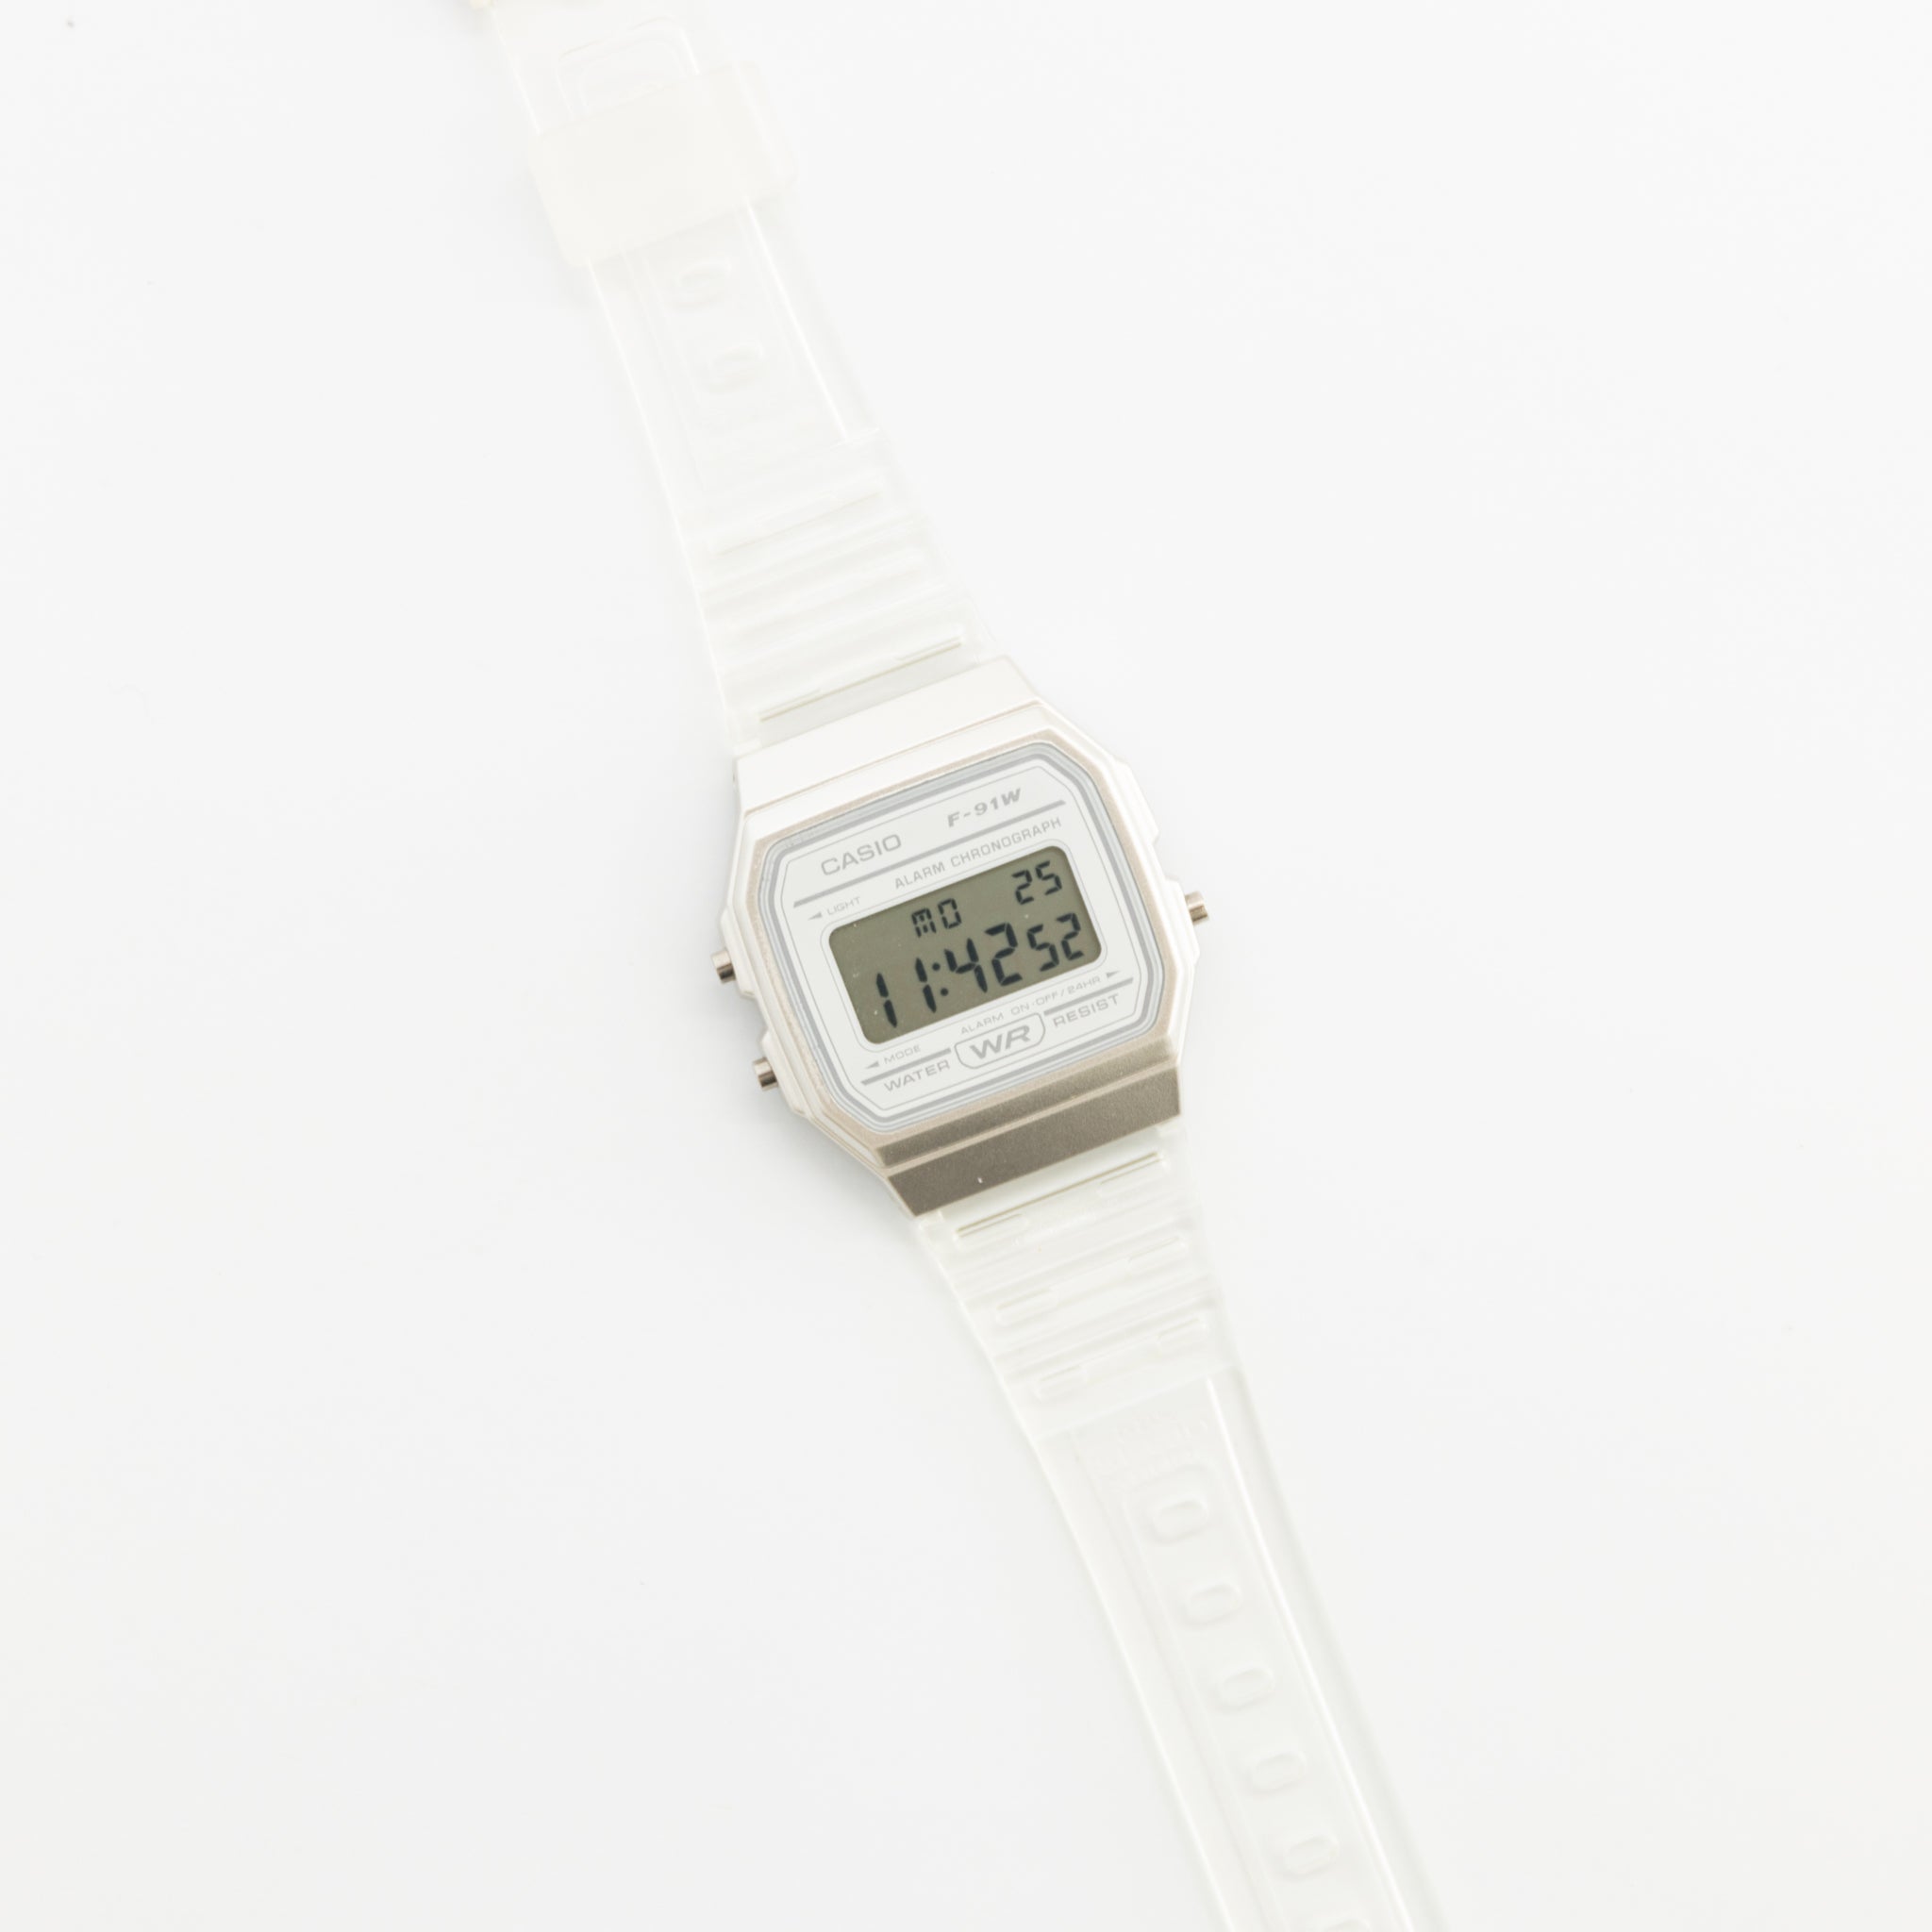 Casio Watches | Tortoise General Store